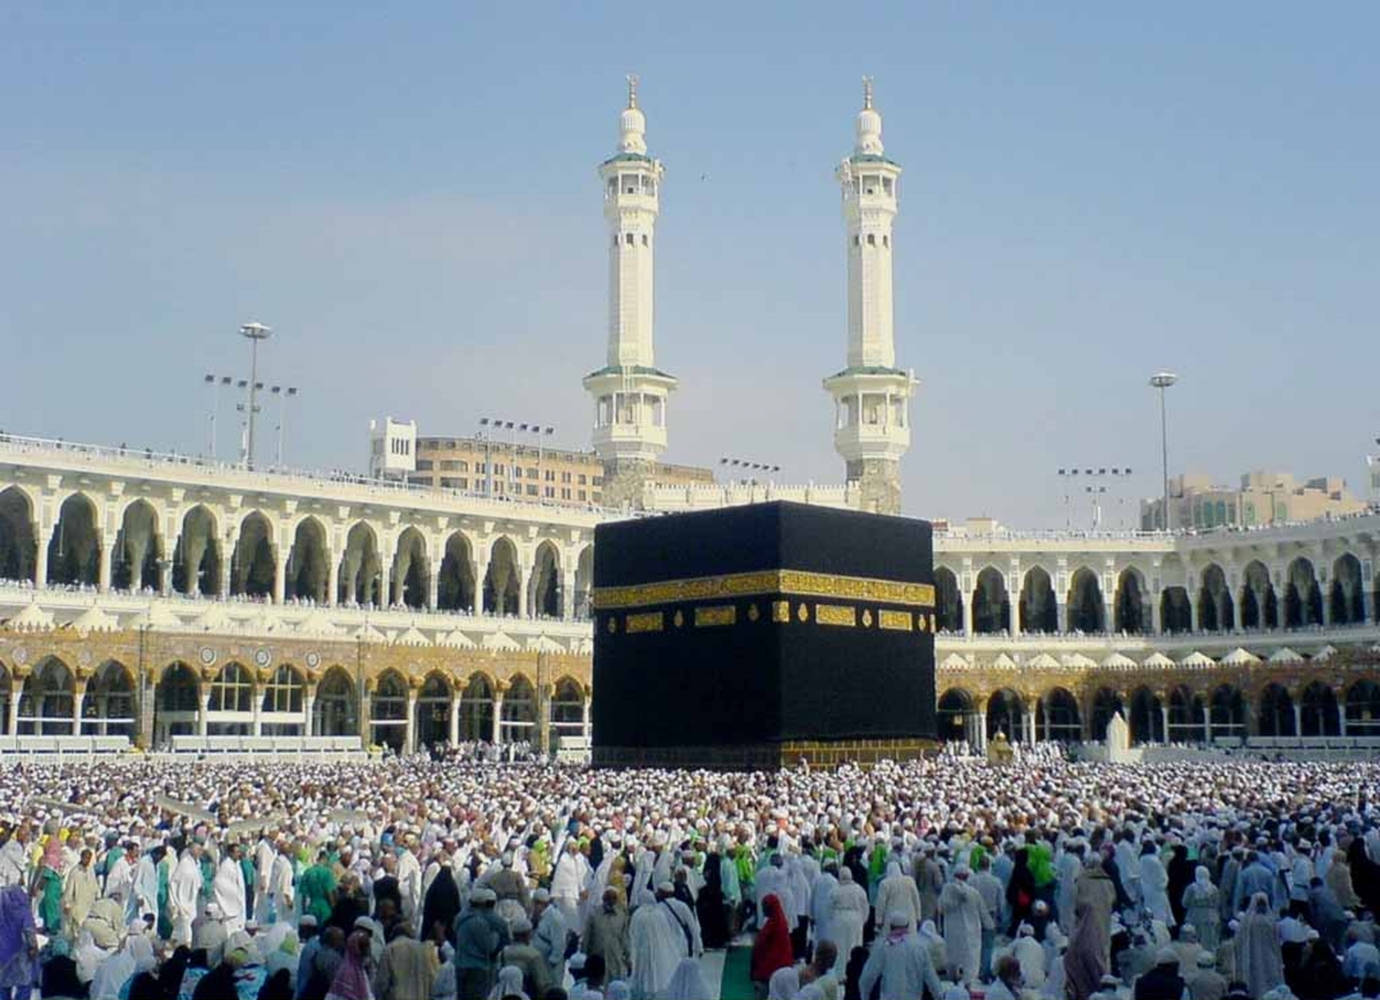 Stunning Hd Image Of The Kaaba In Makkah